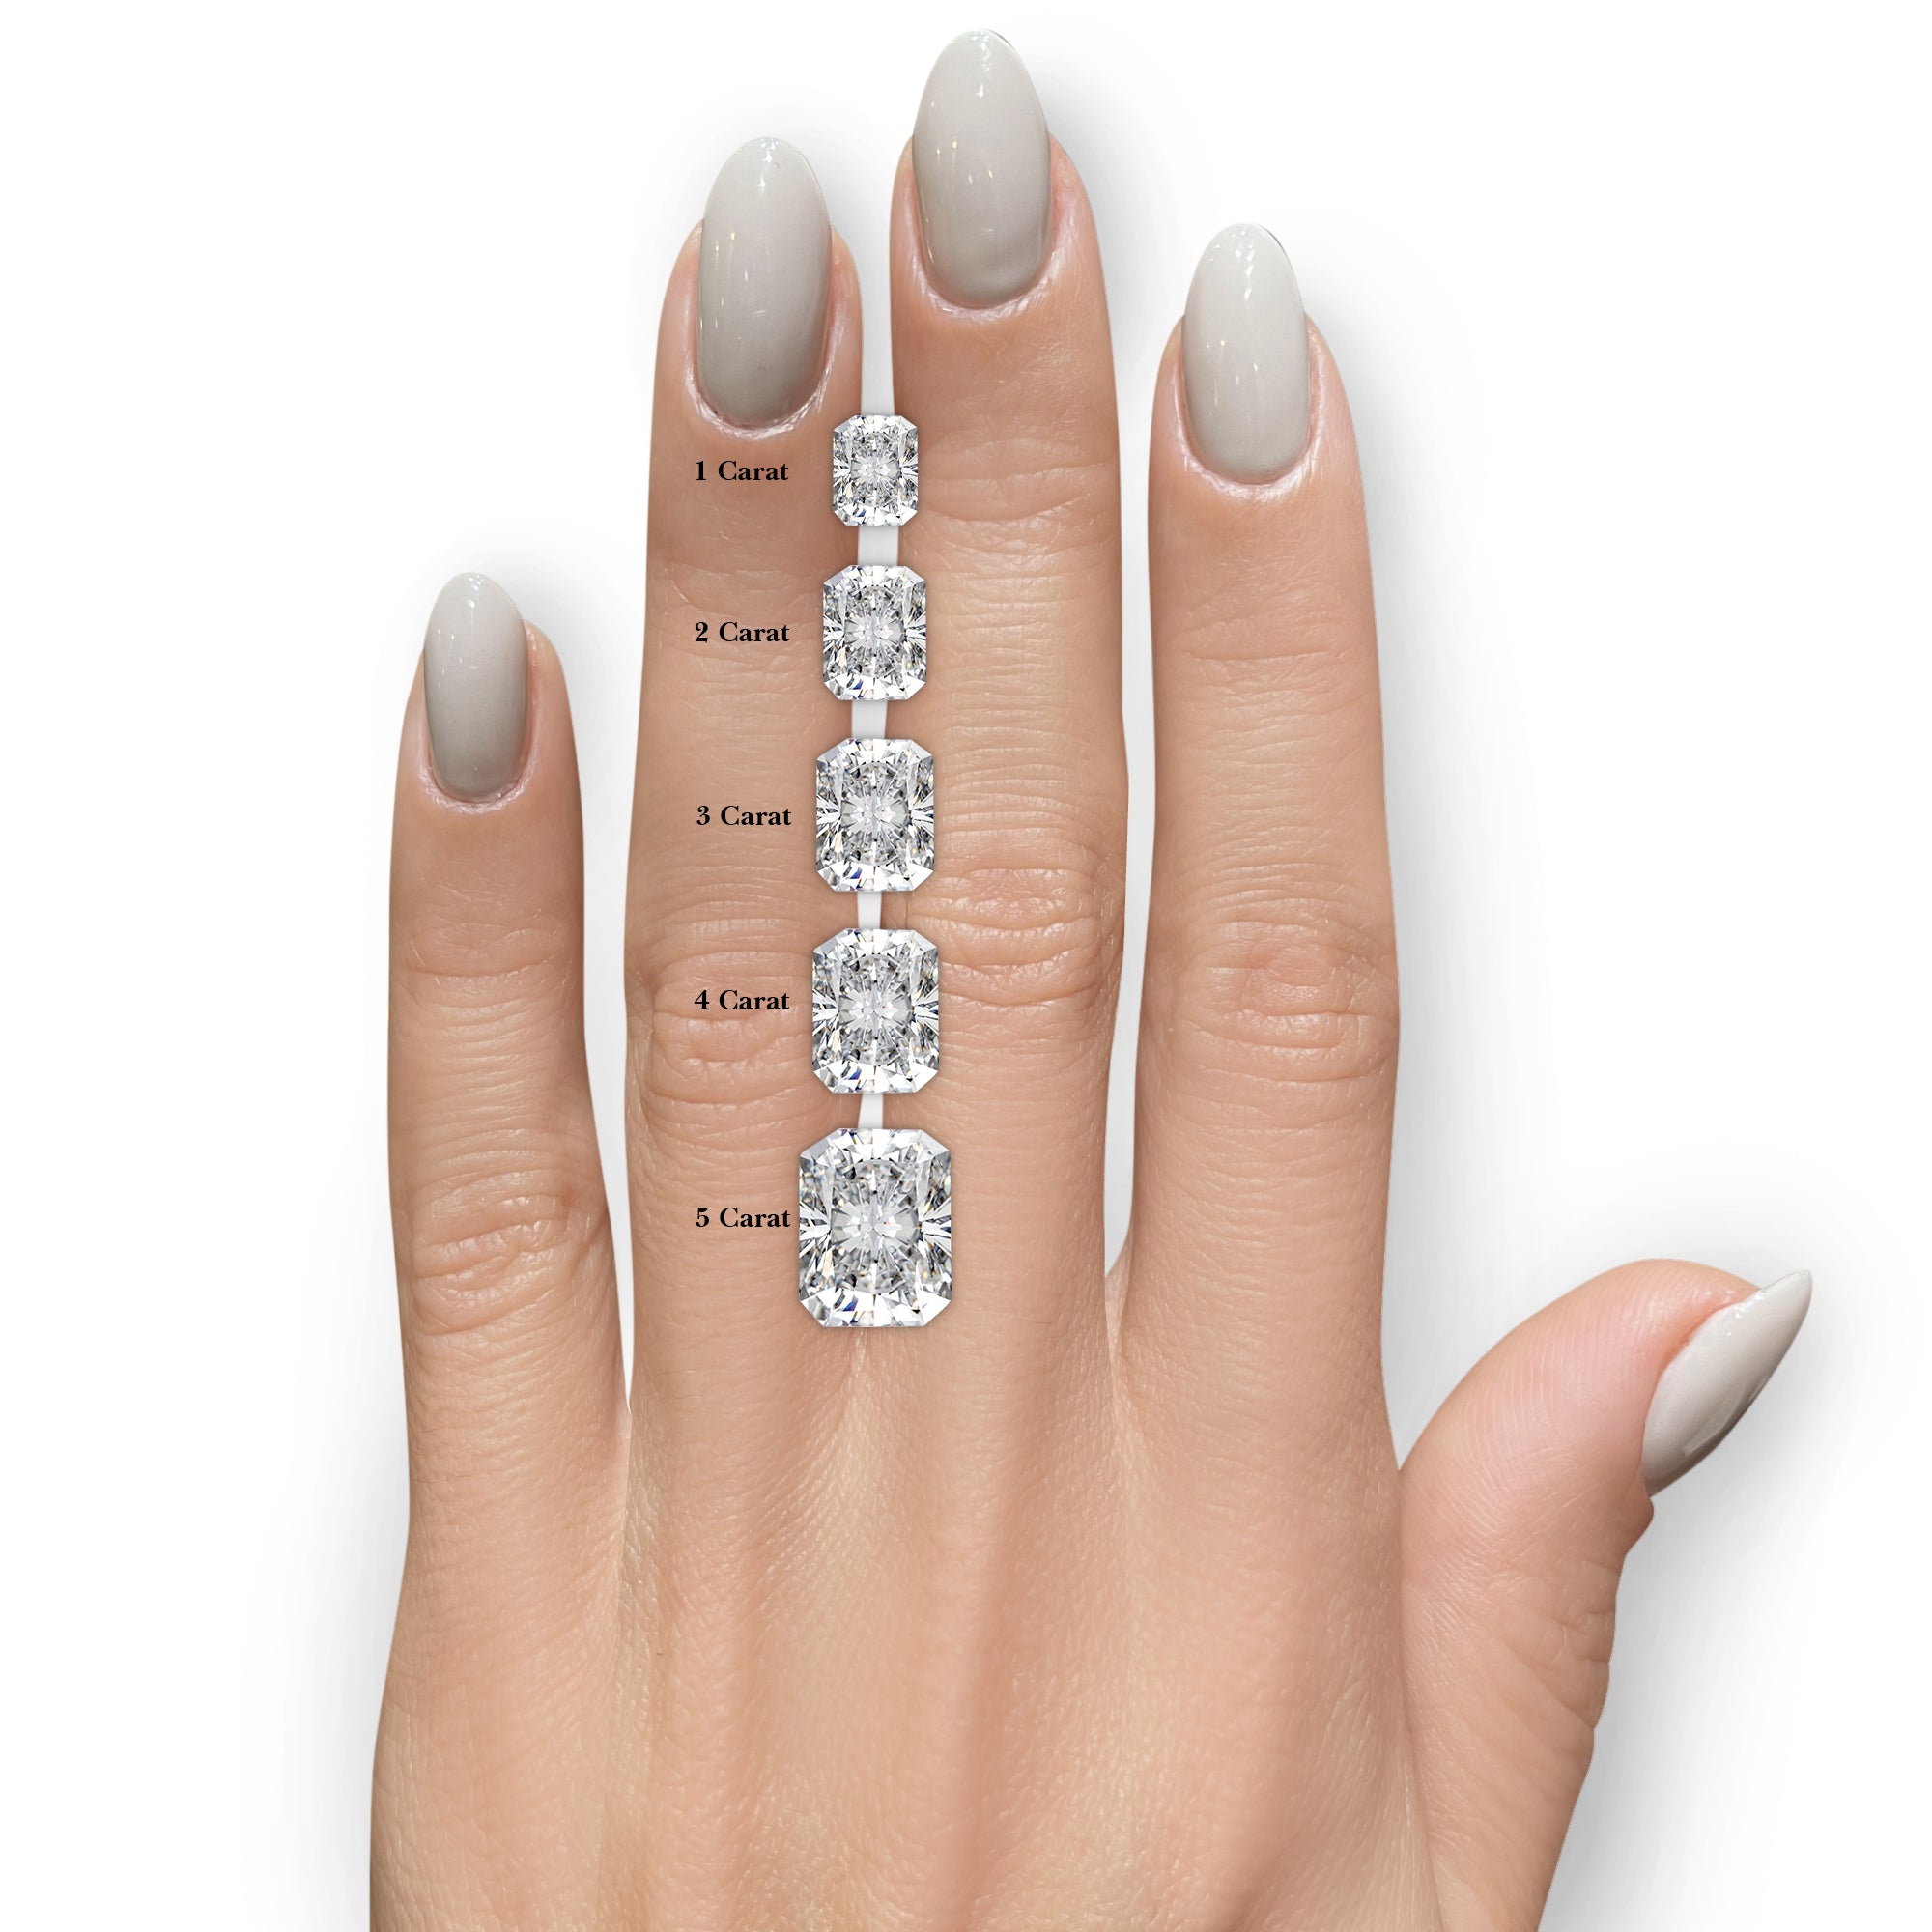 Violet Diamond Engagement Ring - 18K Yellow Gold